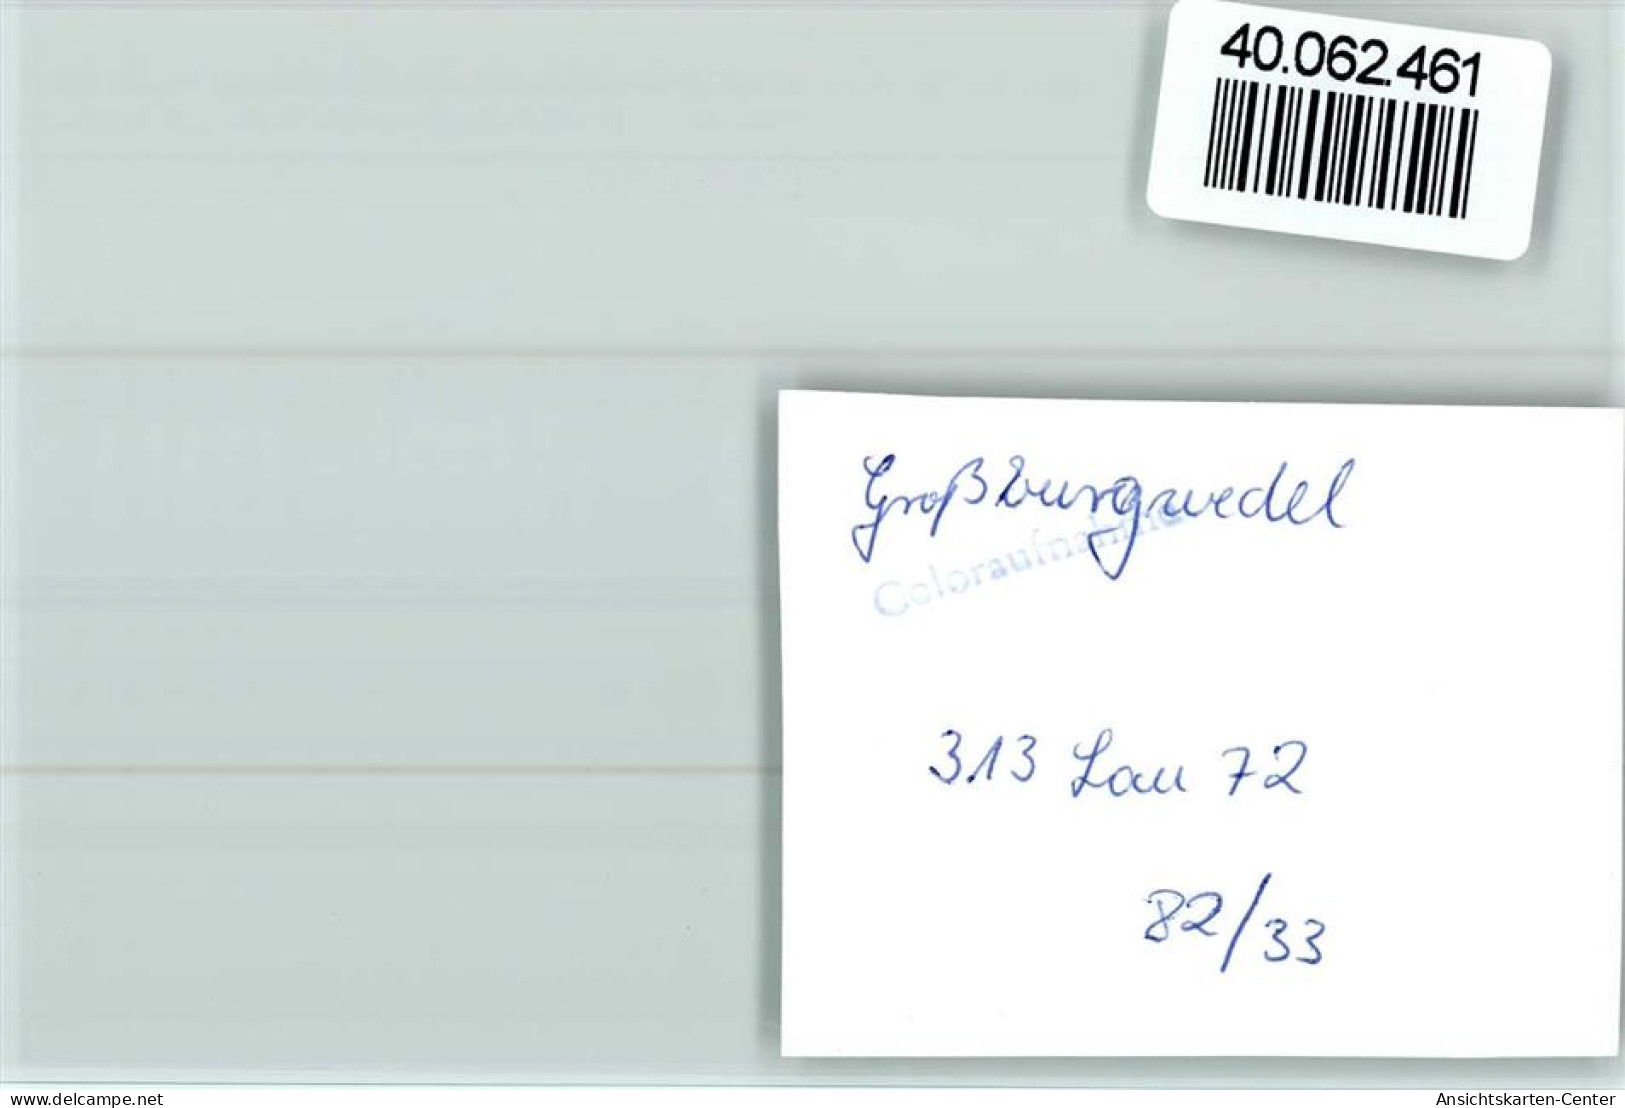 40062461 - Grossburgwedel - Burgwedel